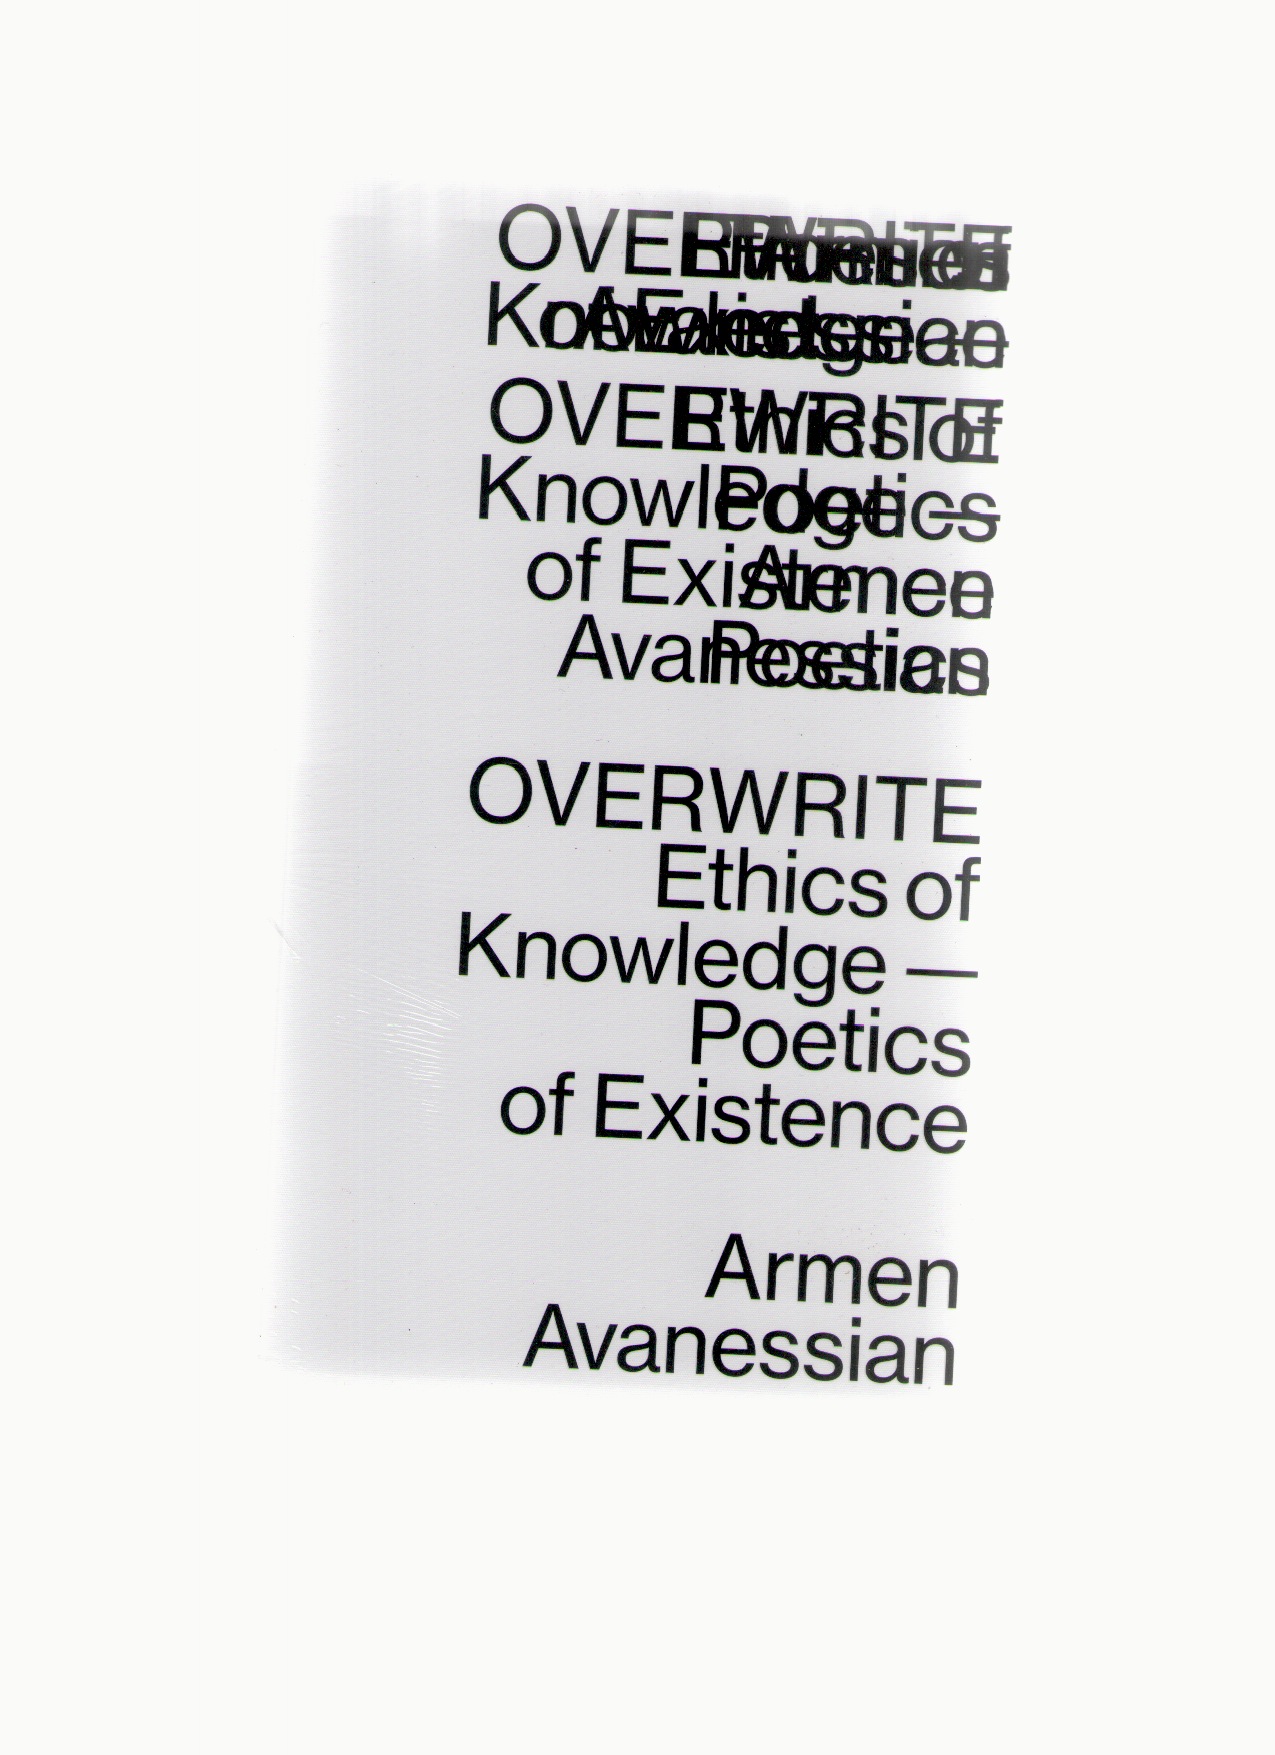 AVANESSIAN, Armen - Overwrite. Ethics of Knowledge - Poetics of Existence